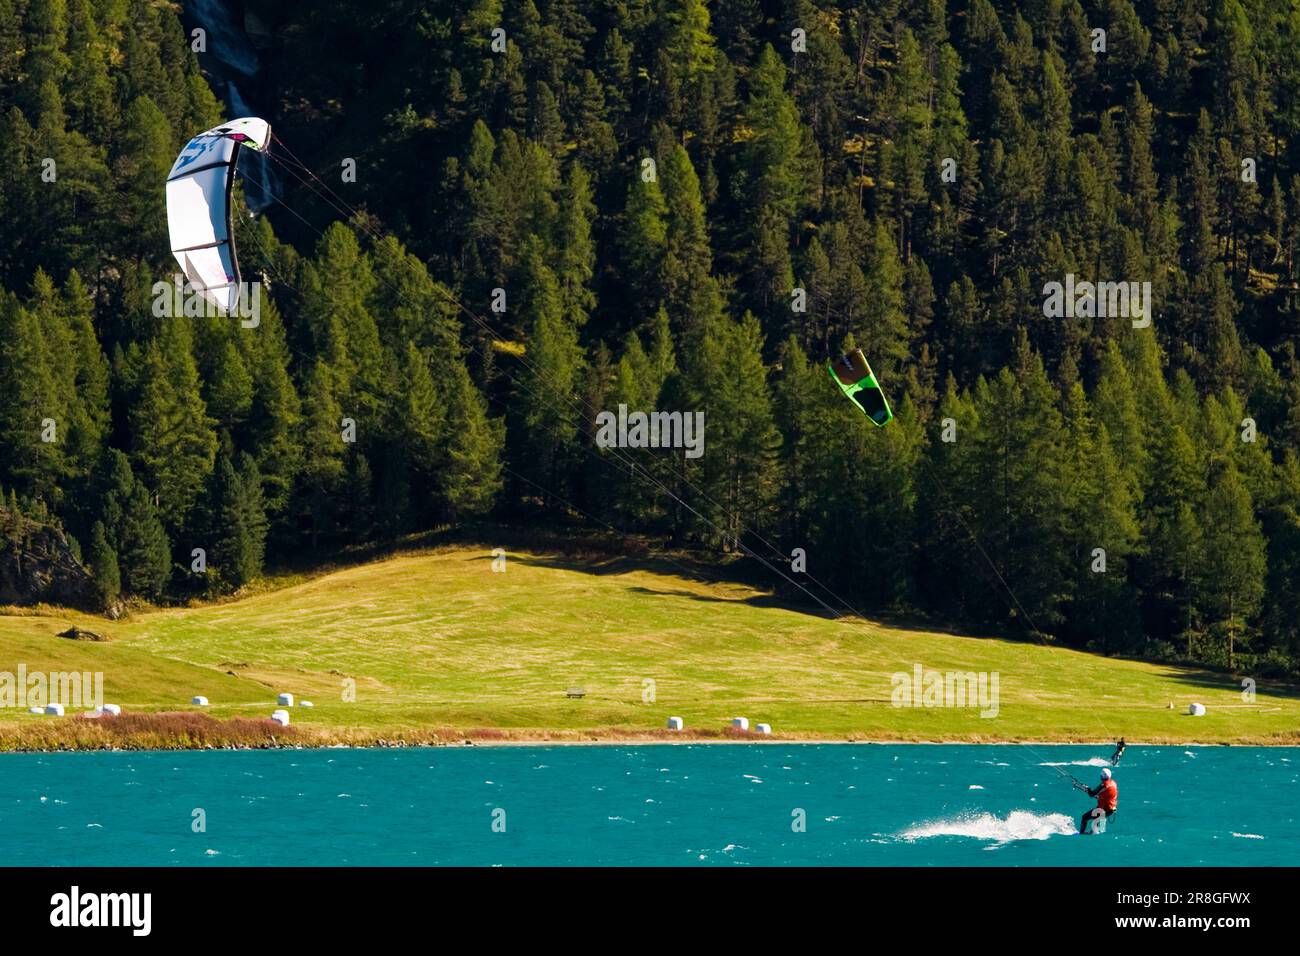 Kitesurf on The Lake, St. Moritz, Switzerland Stock Photo